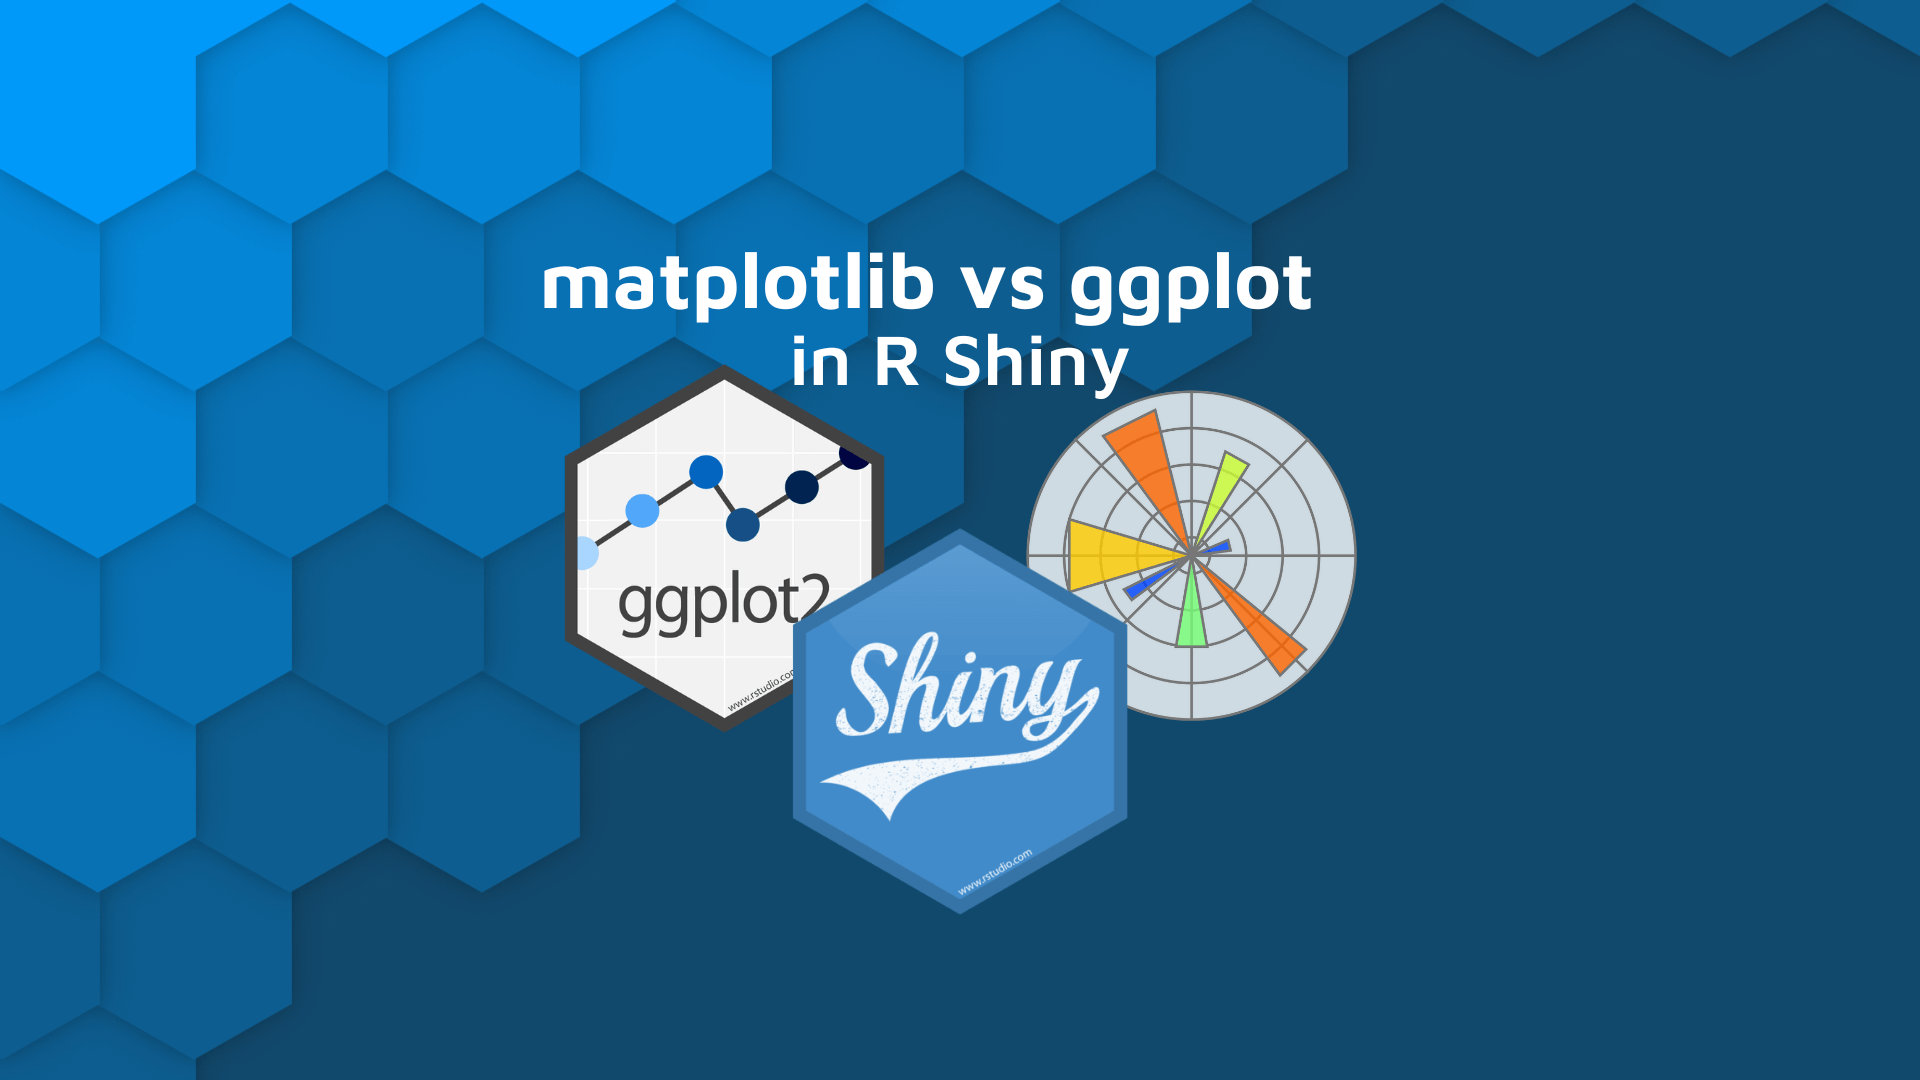 Matplotlib vs ggplot in R Shiny hex blog banner